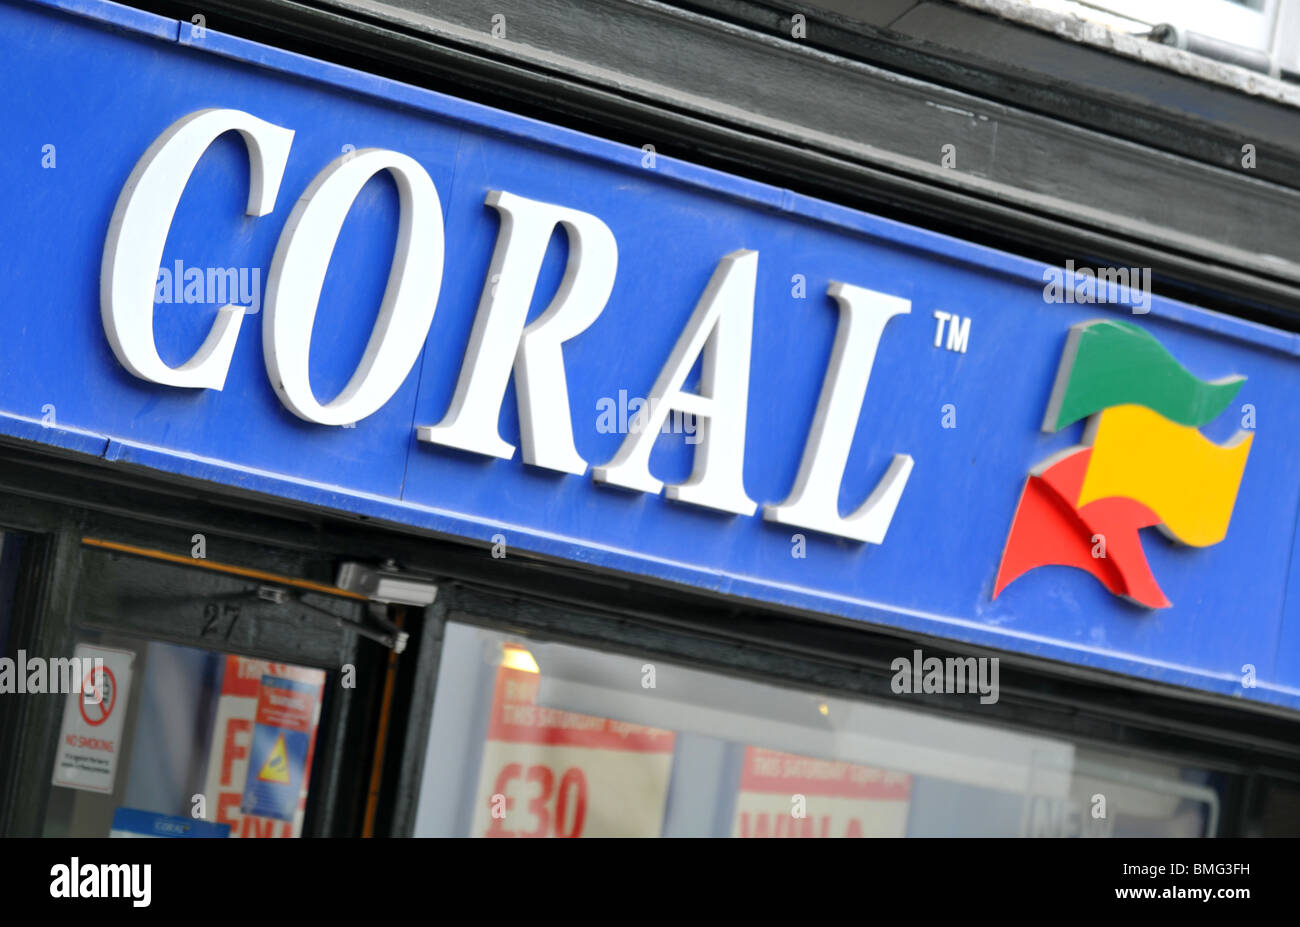 Coral bookmakers, Britain, UK Stock Photo